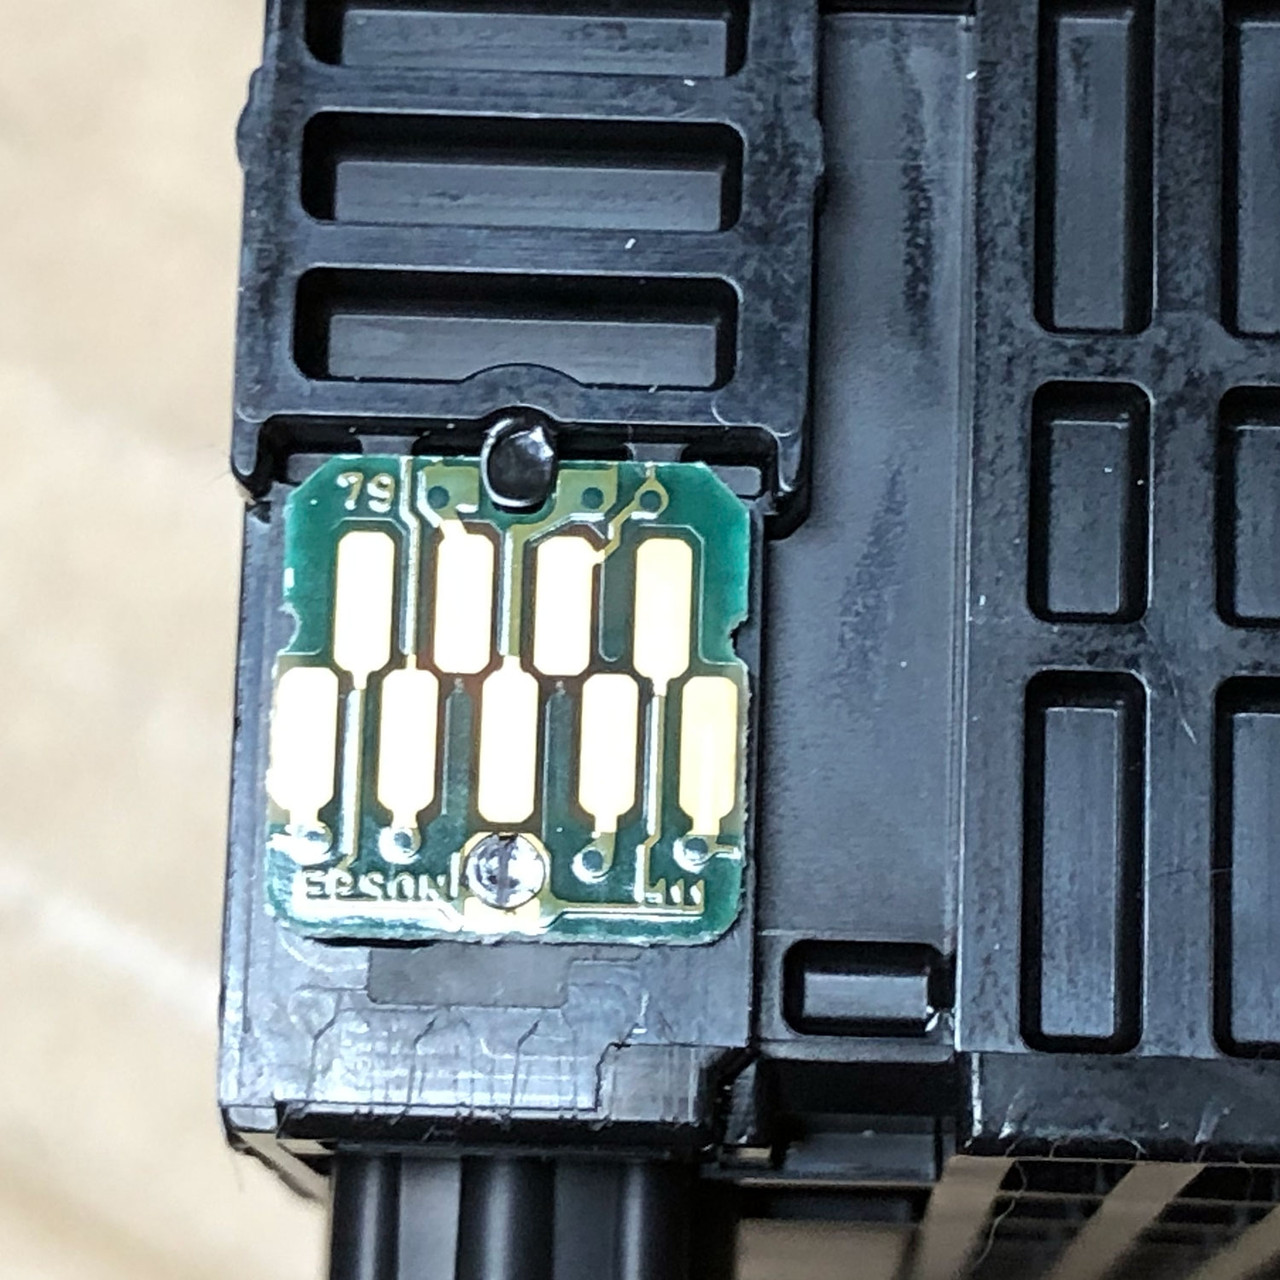 One Regular Epson Cartridge Chip Board CSIC Pins (9-pin